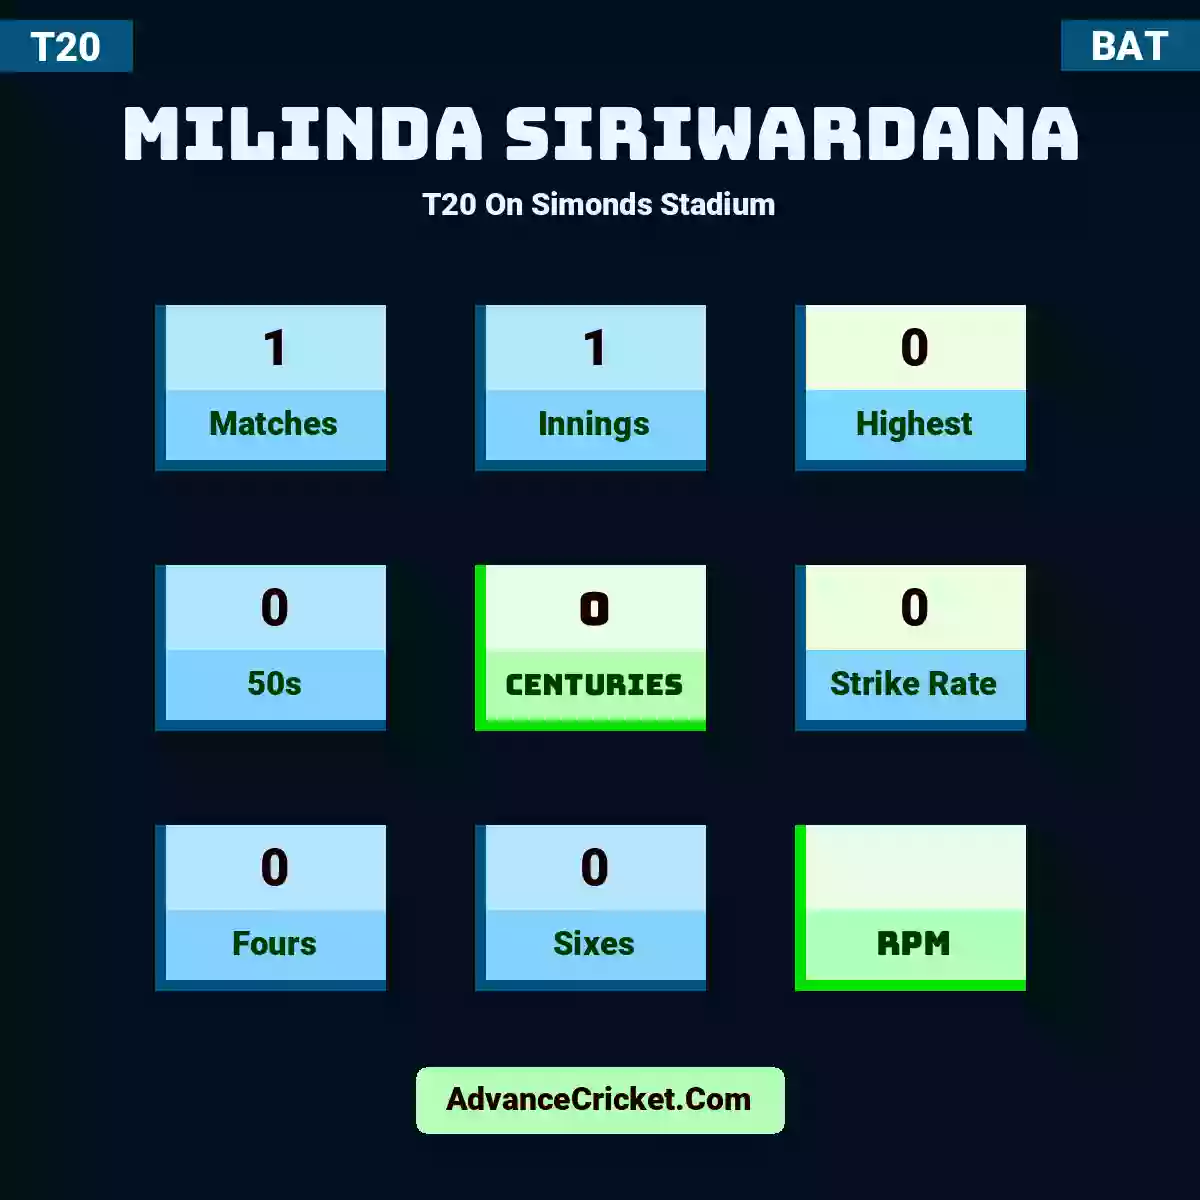 Milinda Siriwardana T20  On Simonds Stadium, Milinda Siriwardana played 1 matches, scored 0 runs as highest, 0 half-centuries, and 0 centuries, with a strike rate of 0. M.Siriwardana hit 0 fours and 0 sixes.